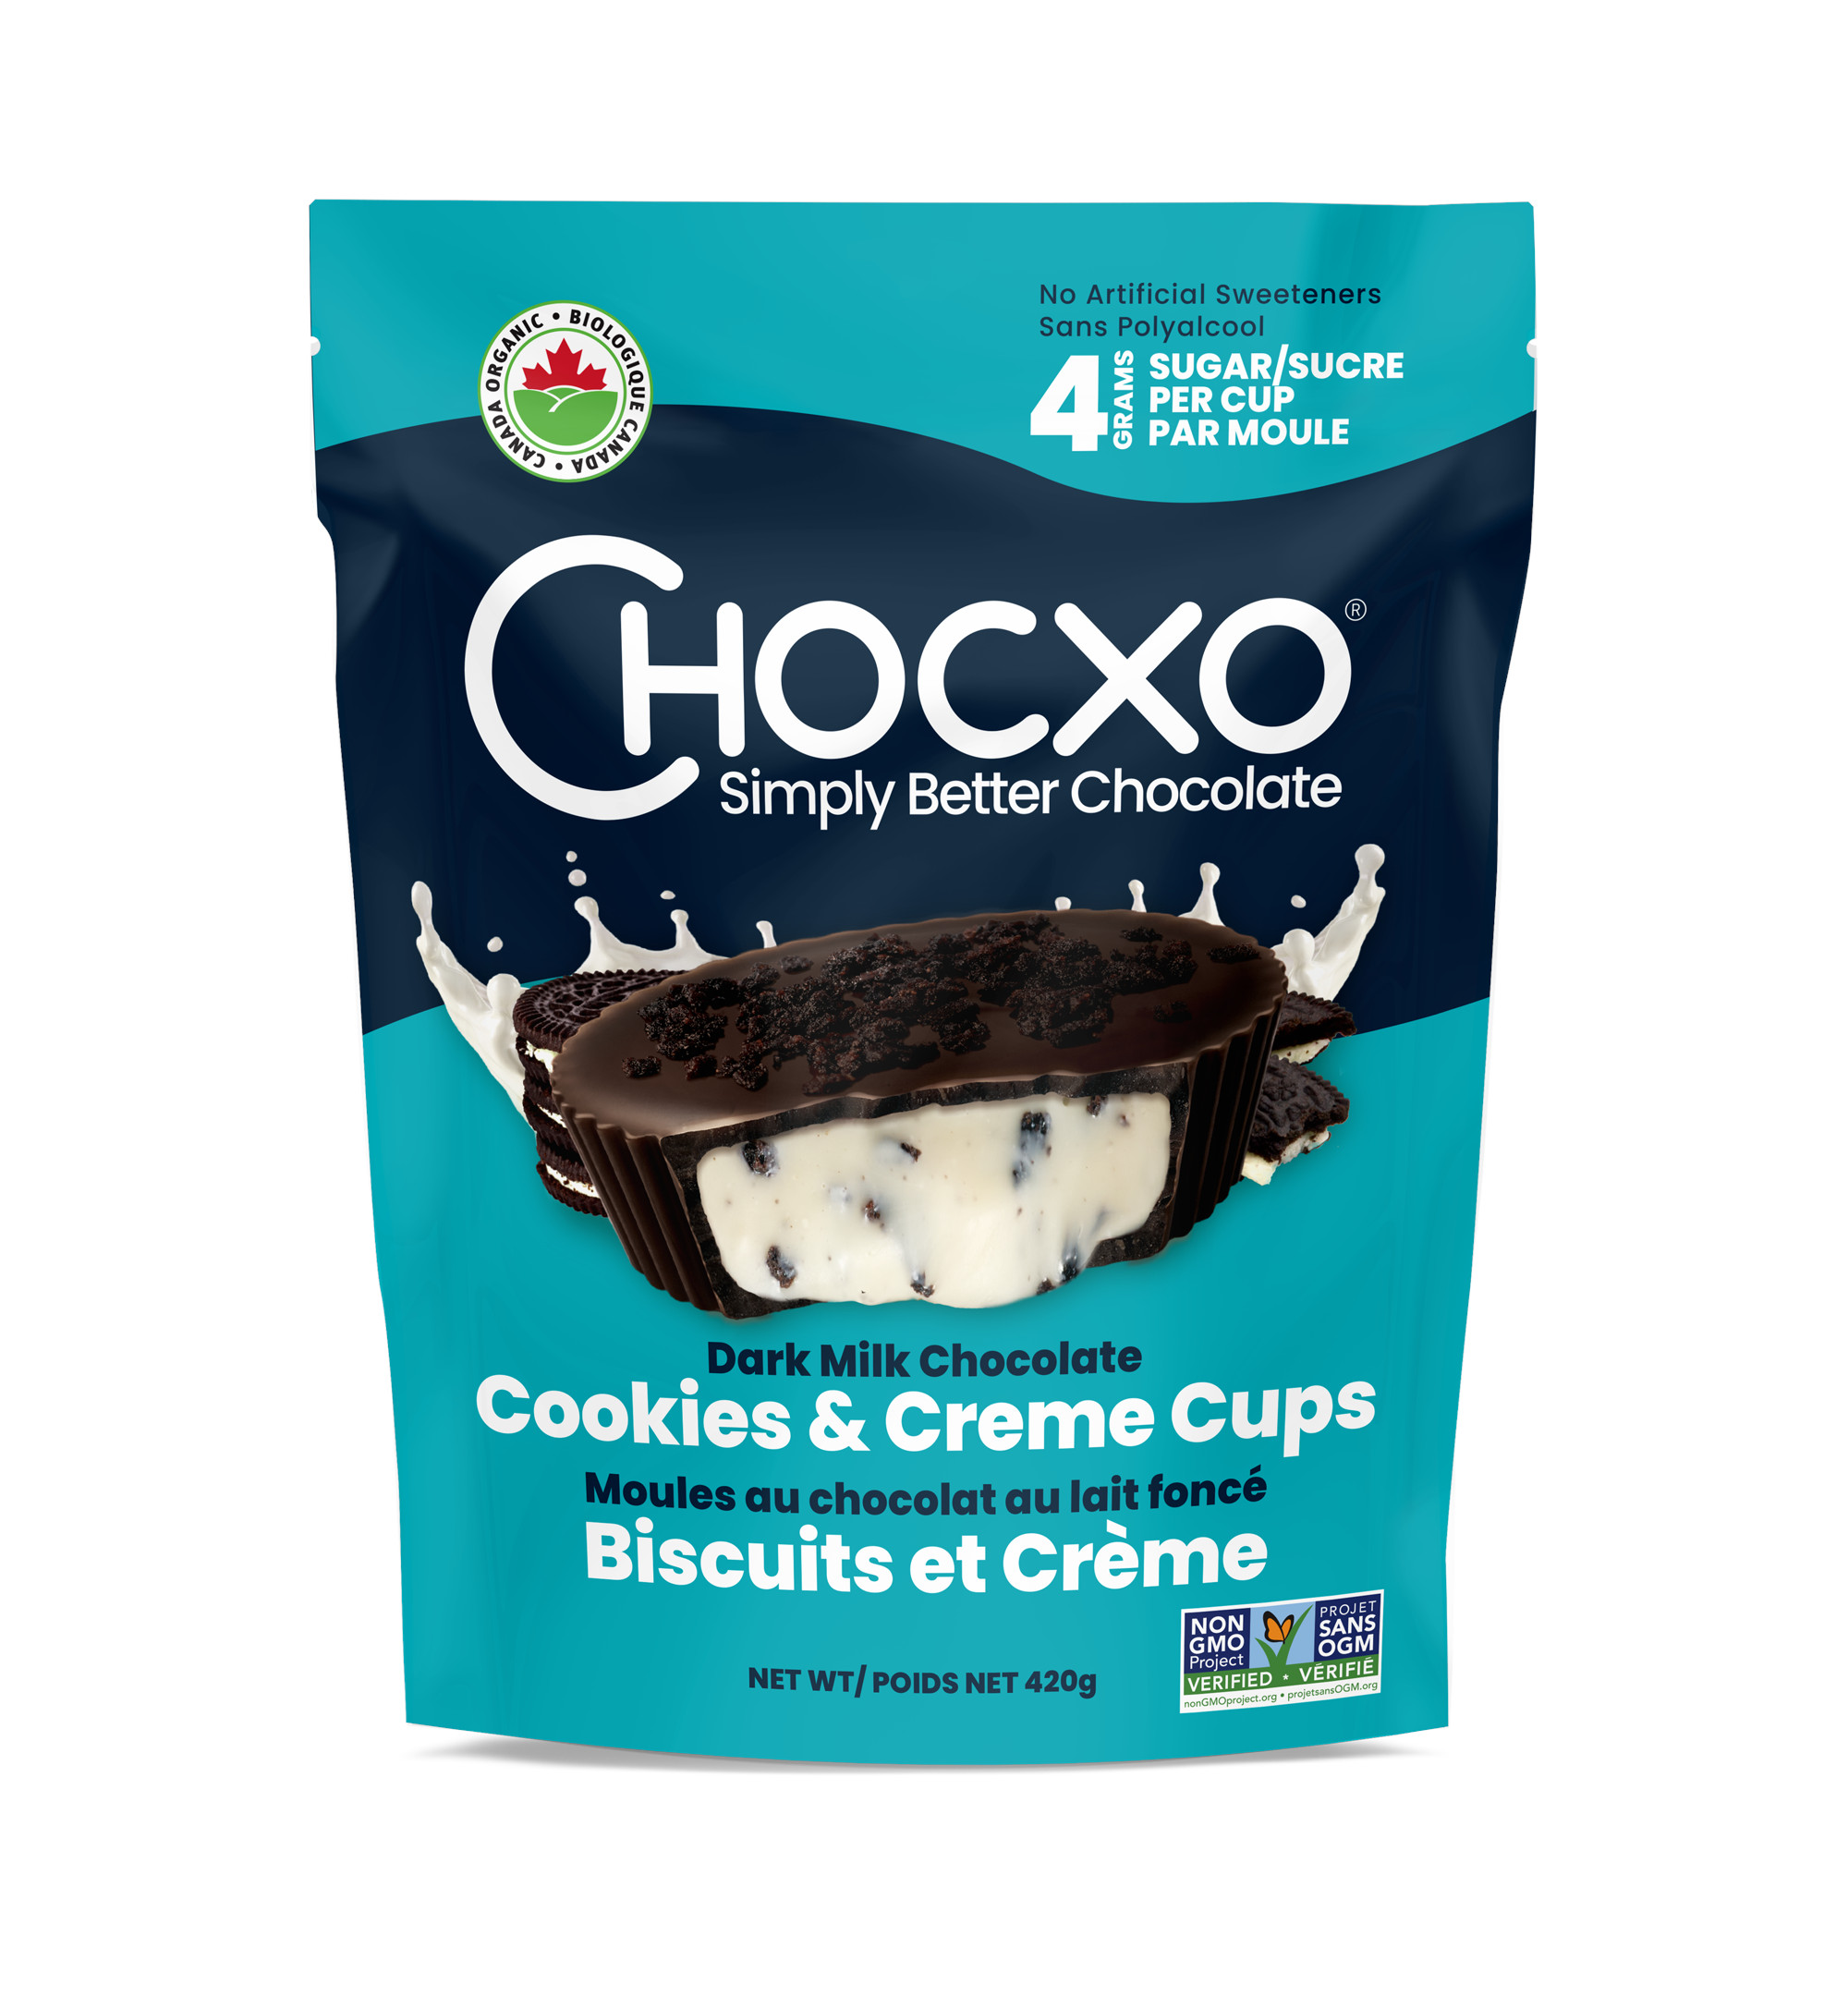 BC-Based Chocxo Chocolatier Puts New Twist on Cookies & Creme this Summer; New Dark Milk Chocolate Cookies & Creme Cups Launch Across Canada